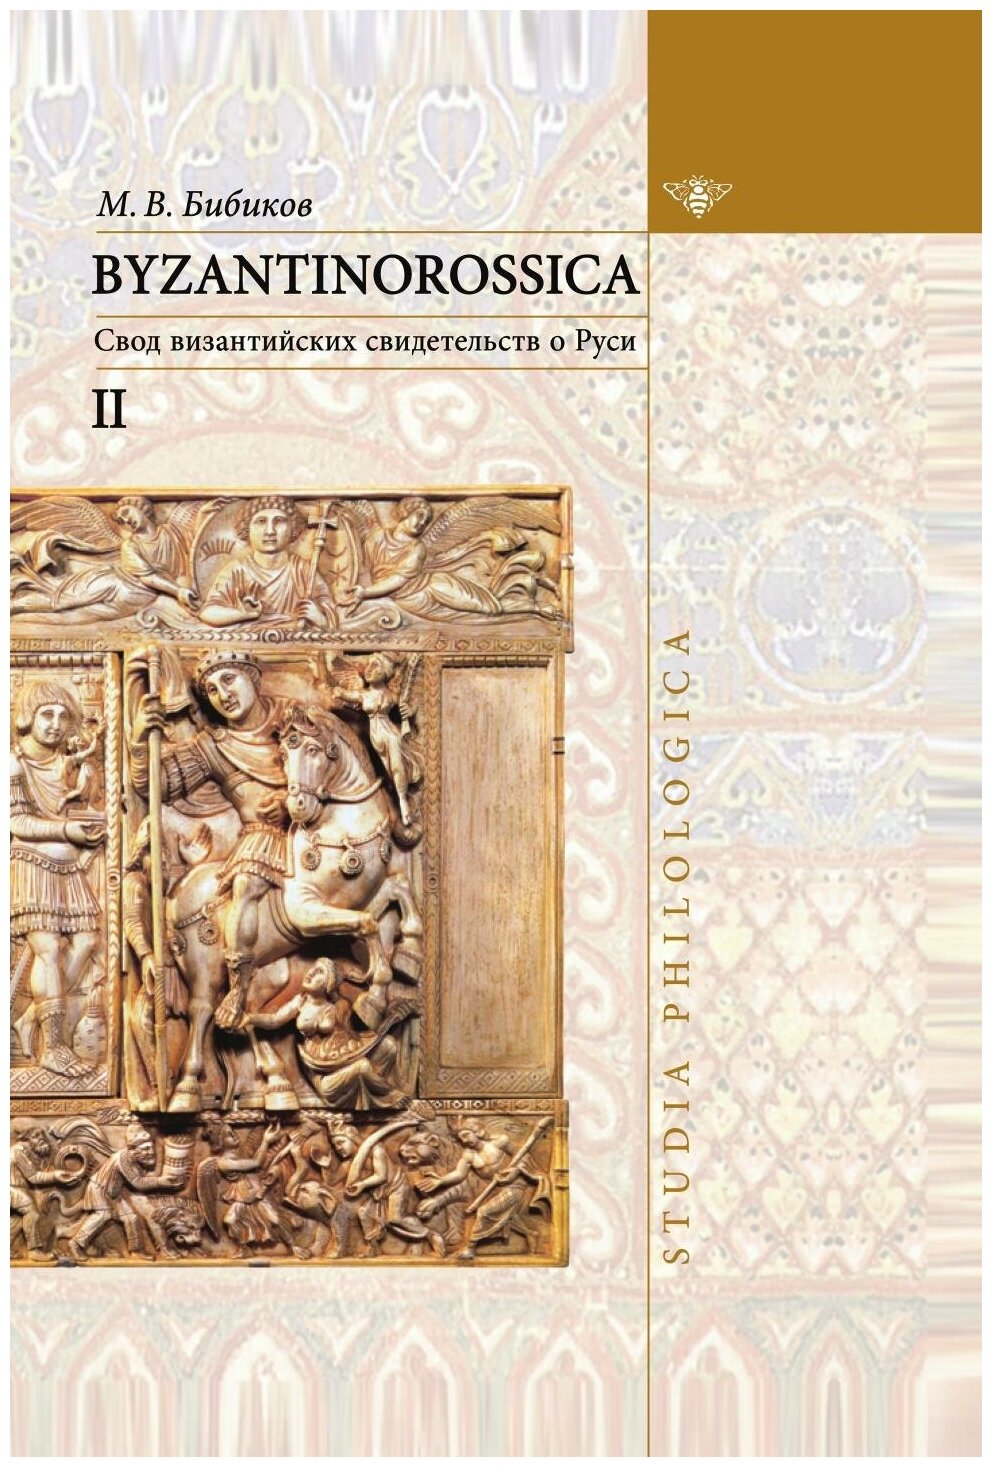 BYZANTINOROSSICA Нарративные памятники: Том II: Свод византийских свидетельств о Руси - ("Studia philologica")